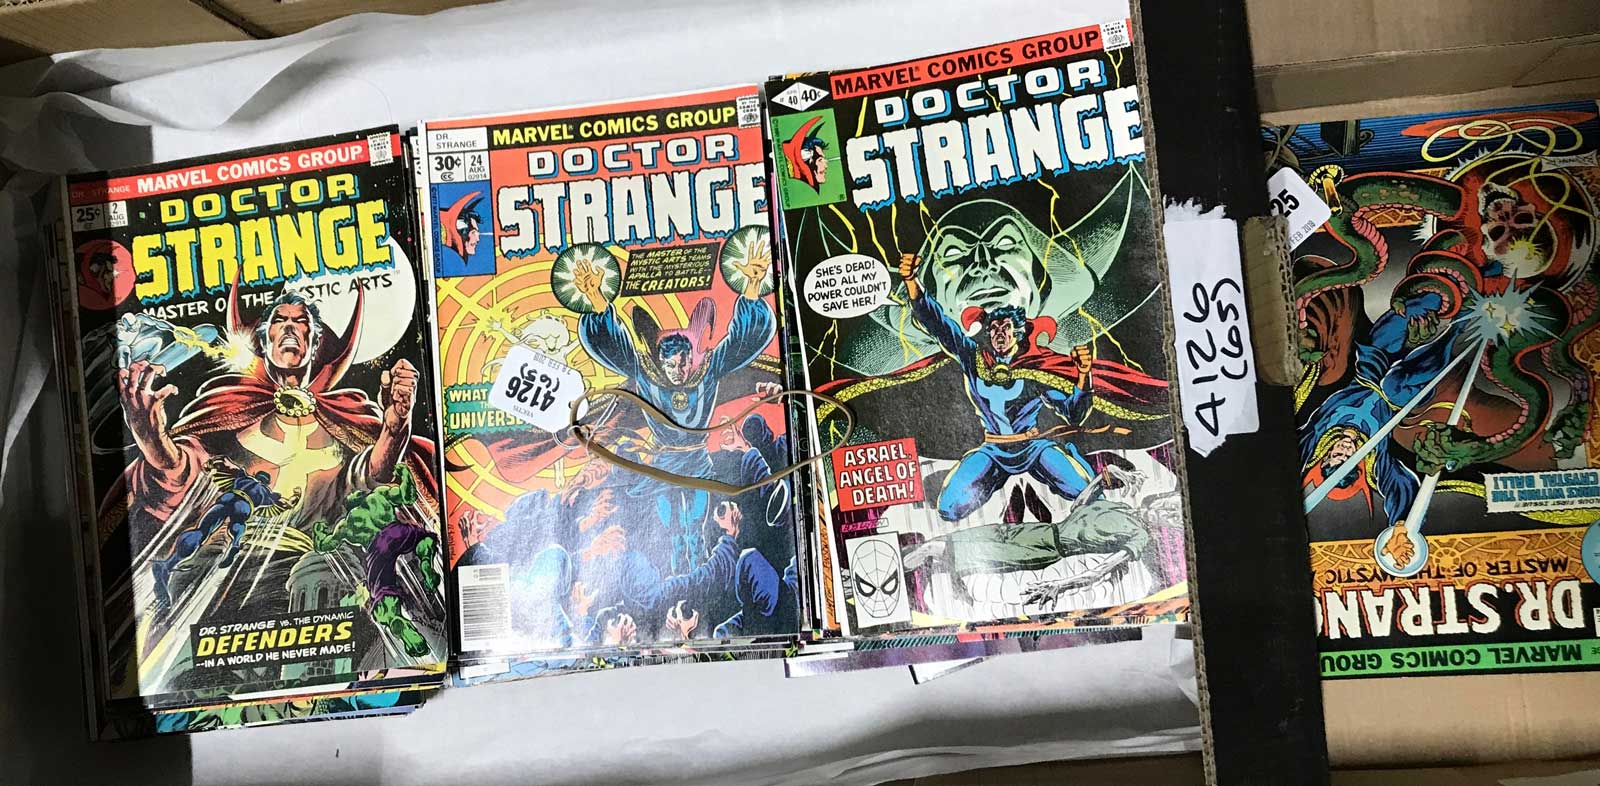 Doctor Strange comics - Vectis sale 28th February 2018